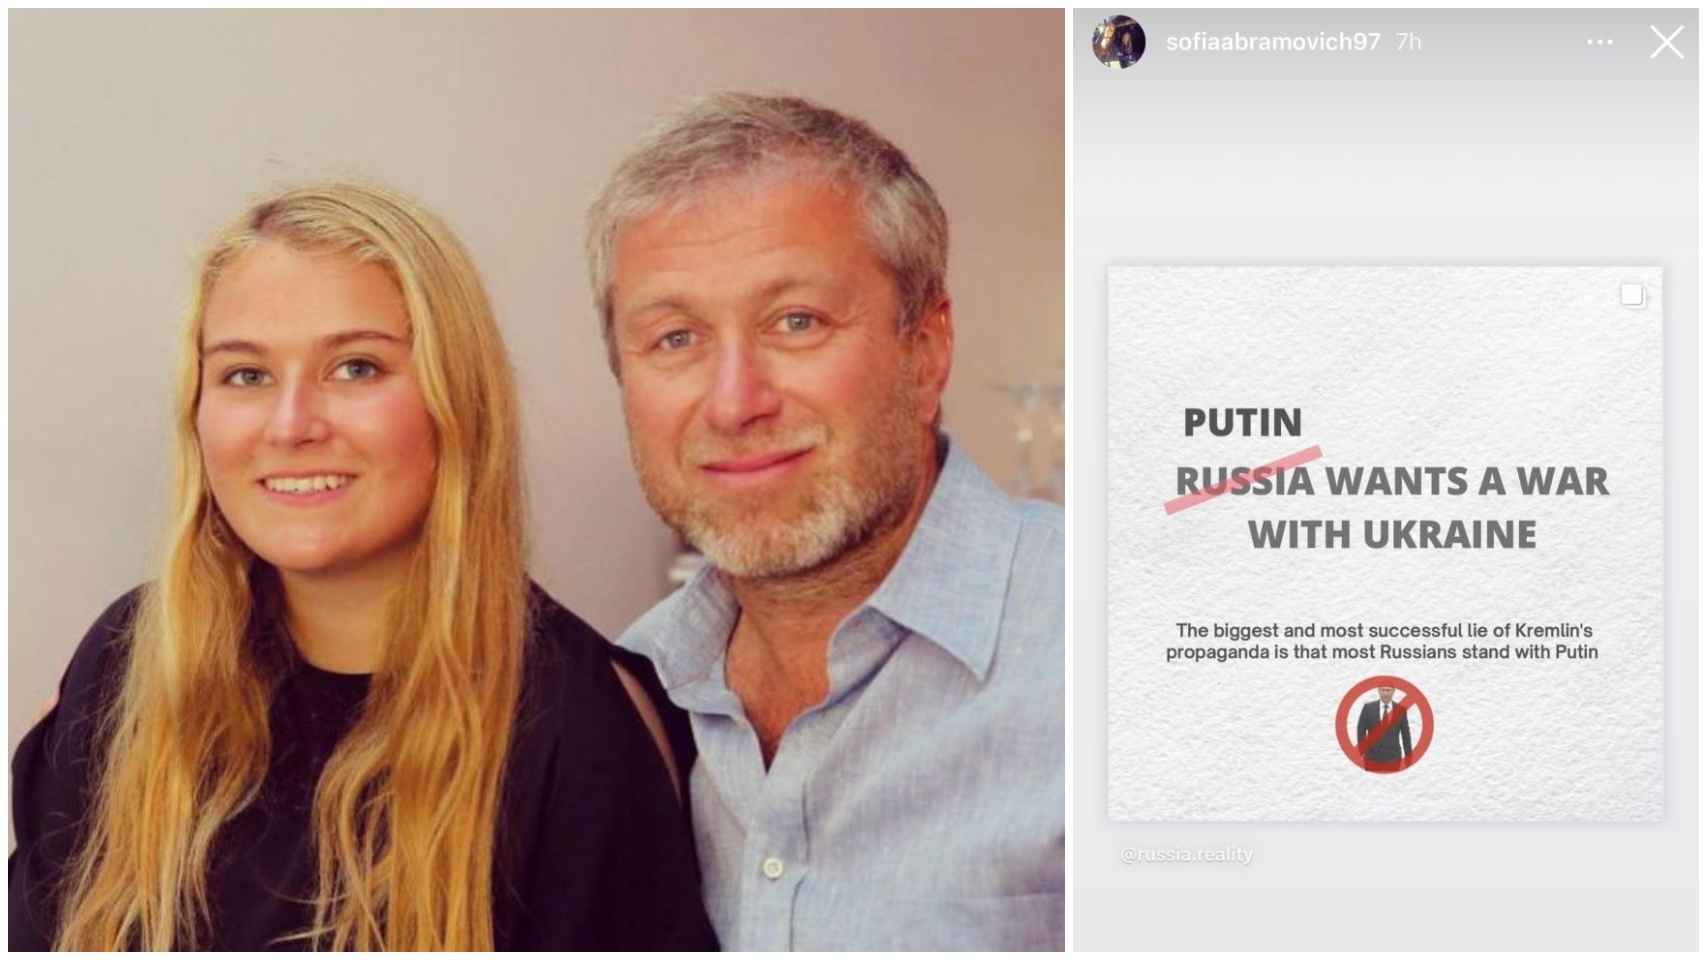 El mensaje de la hija de Roman Abramovich contra Vladimir Putin